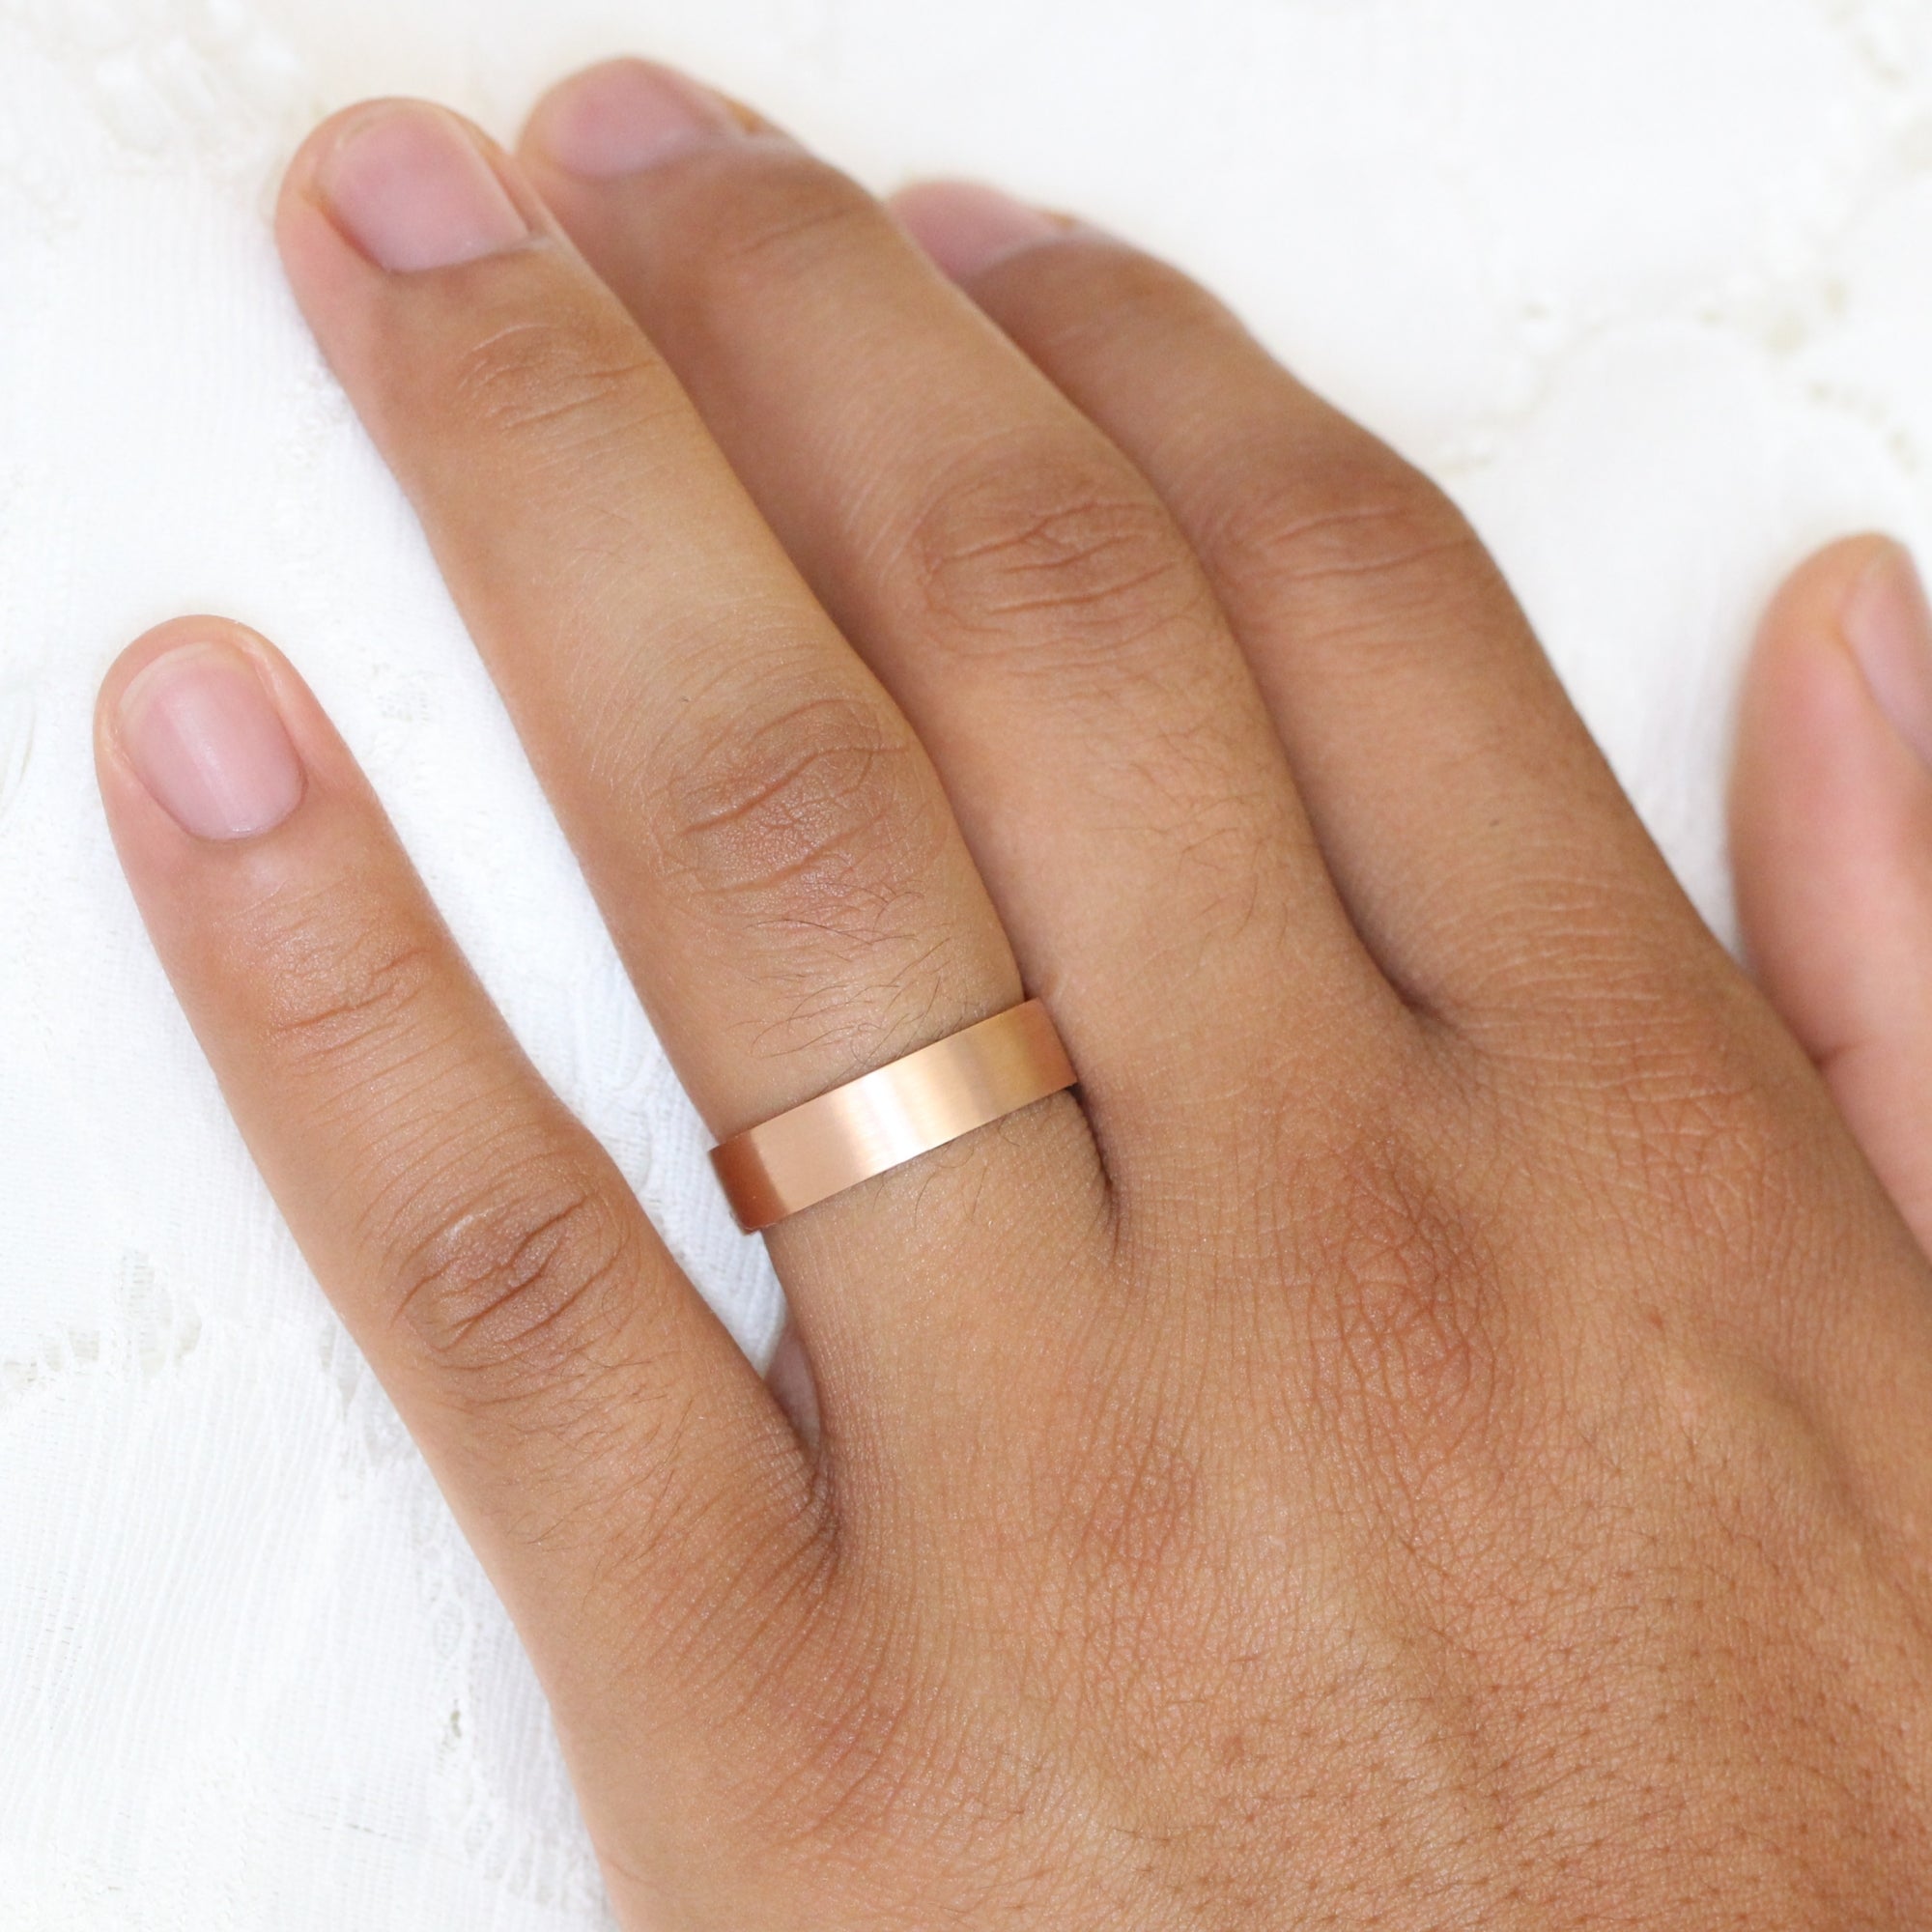 Mens wedding ring rose gold flat wedding band matte finish gold ring la more design jewelry